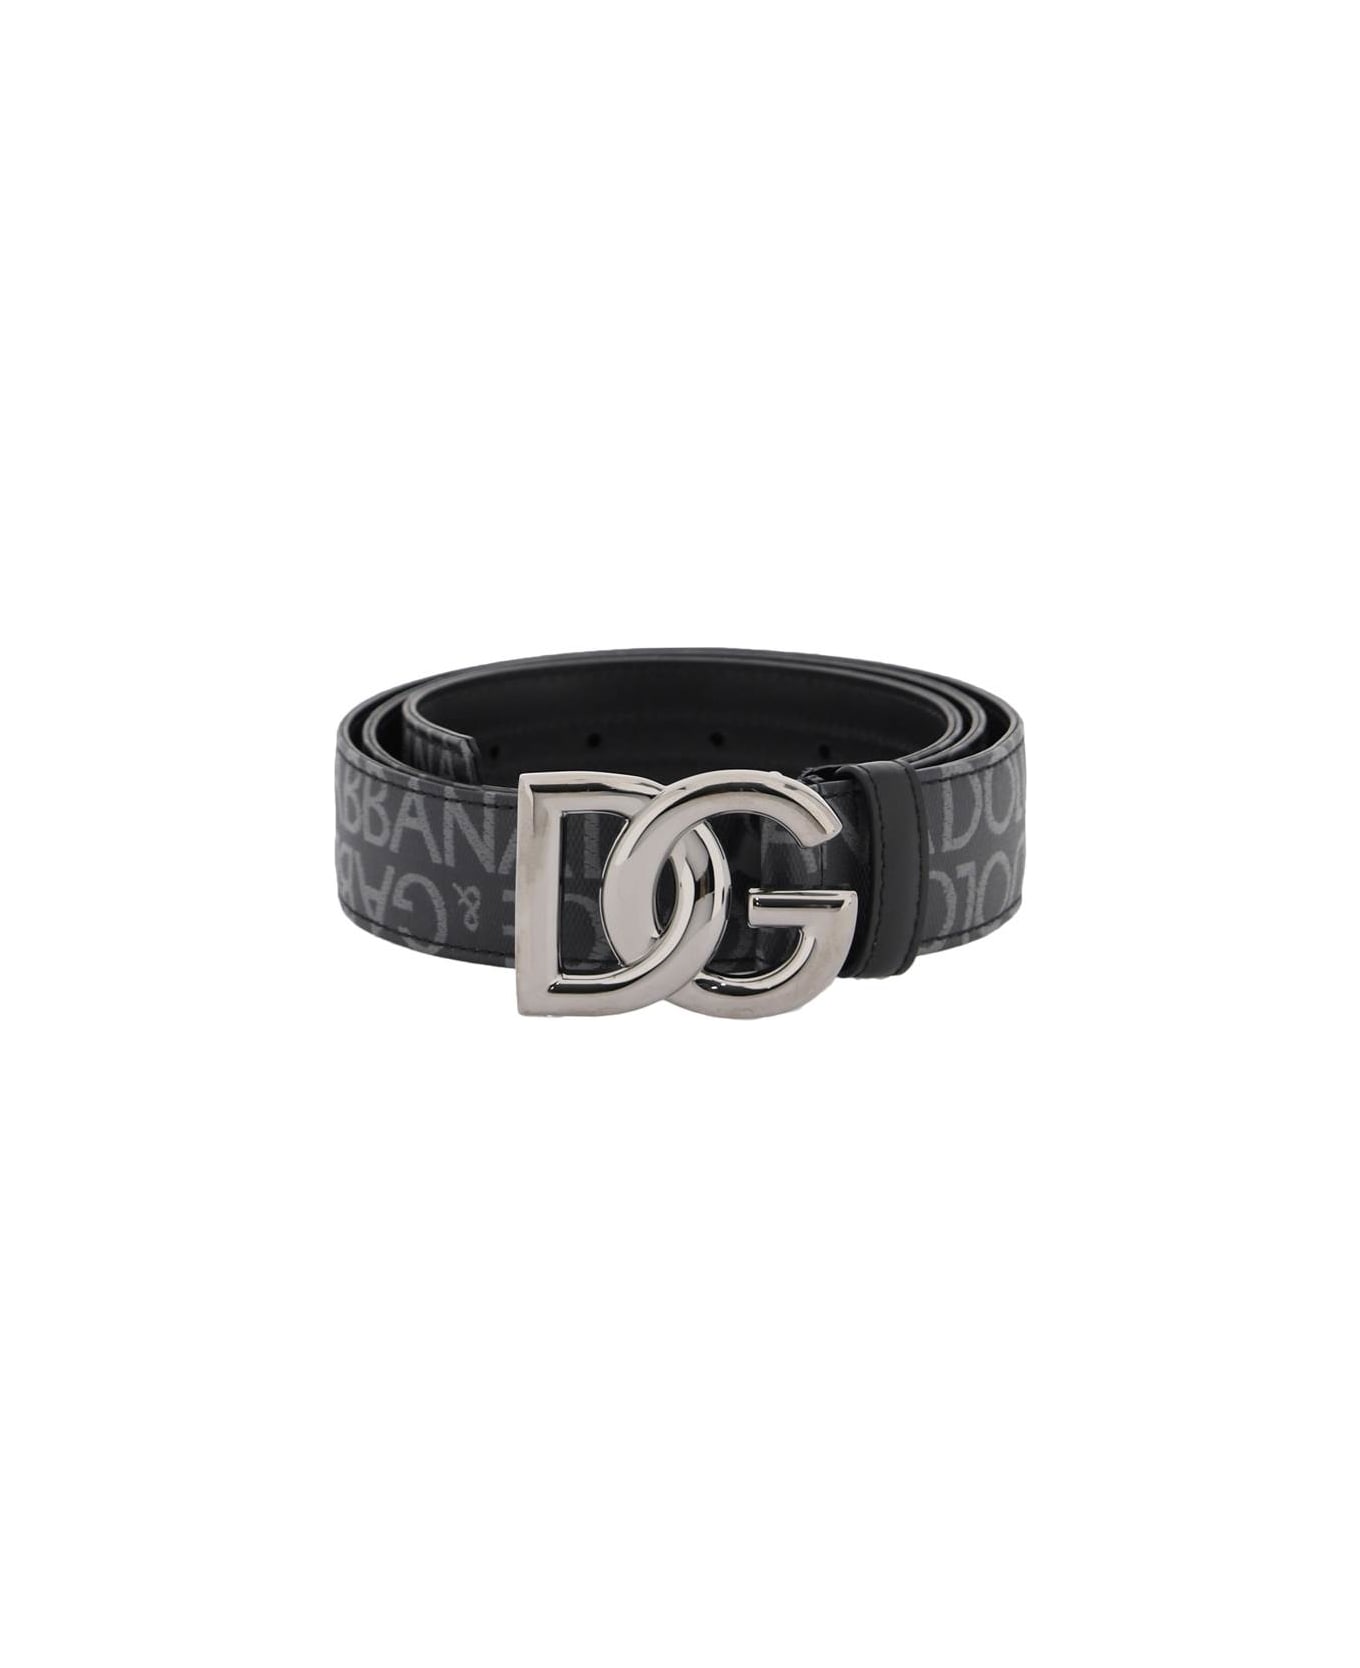 Dolce & Gabbana Coated Canvas Belt - Black / Grey